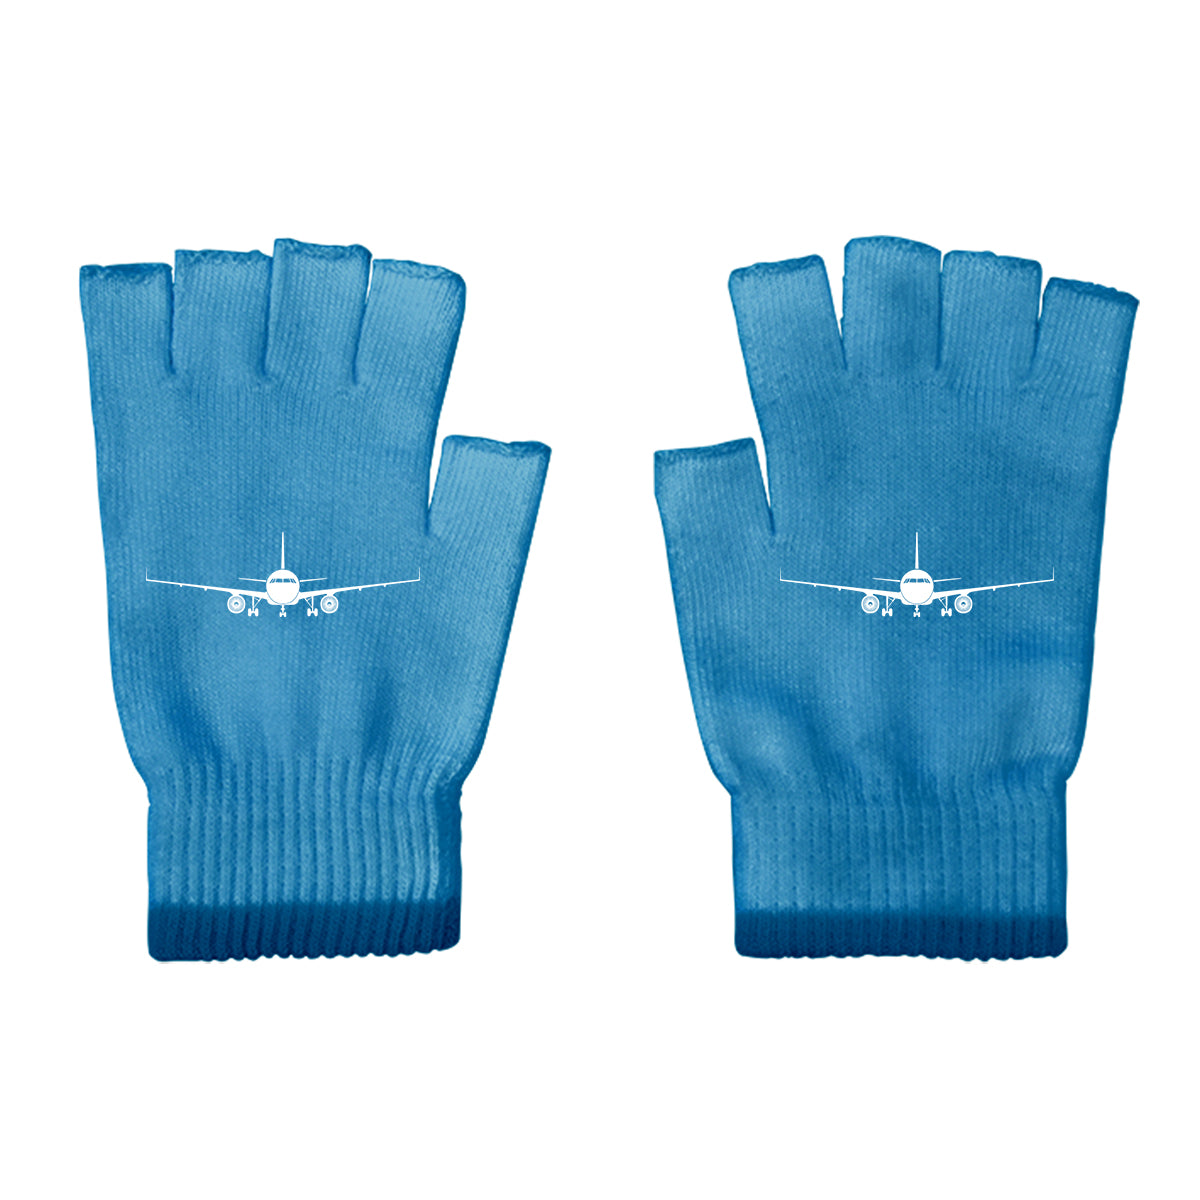 Airbus A320 Silhouette Designed Cut Gloves